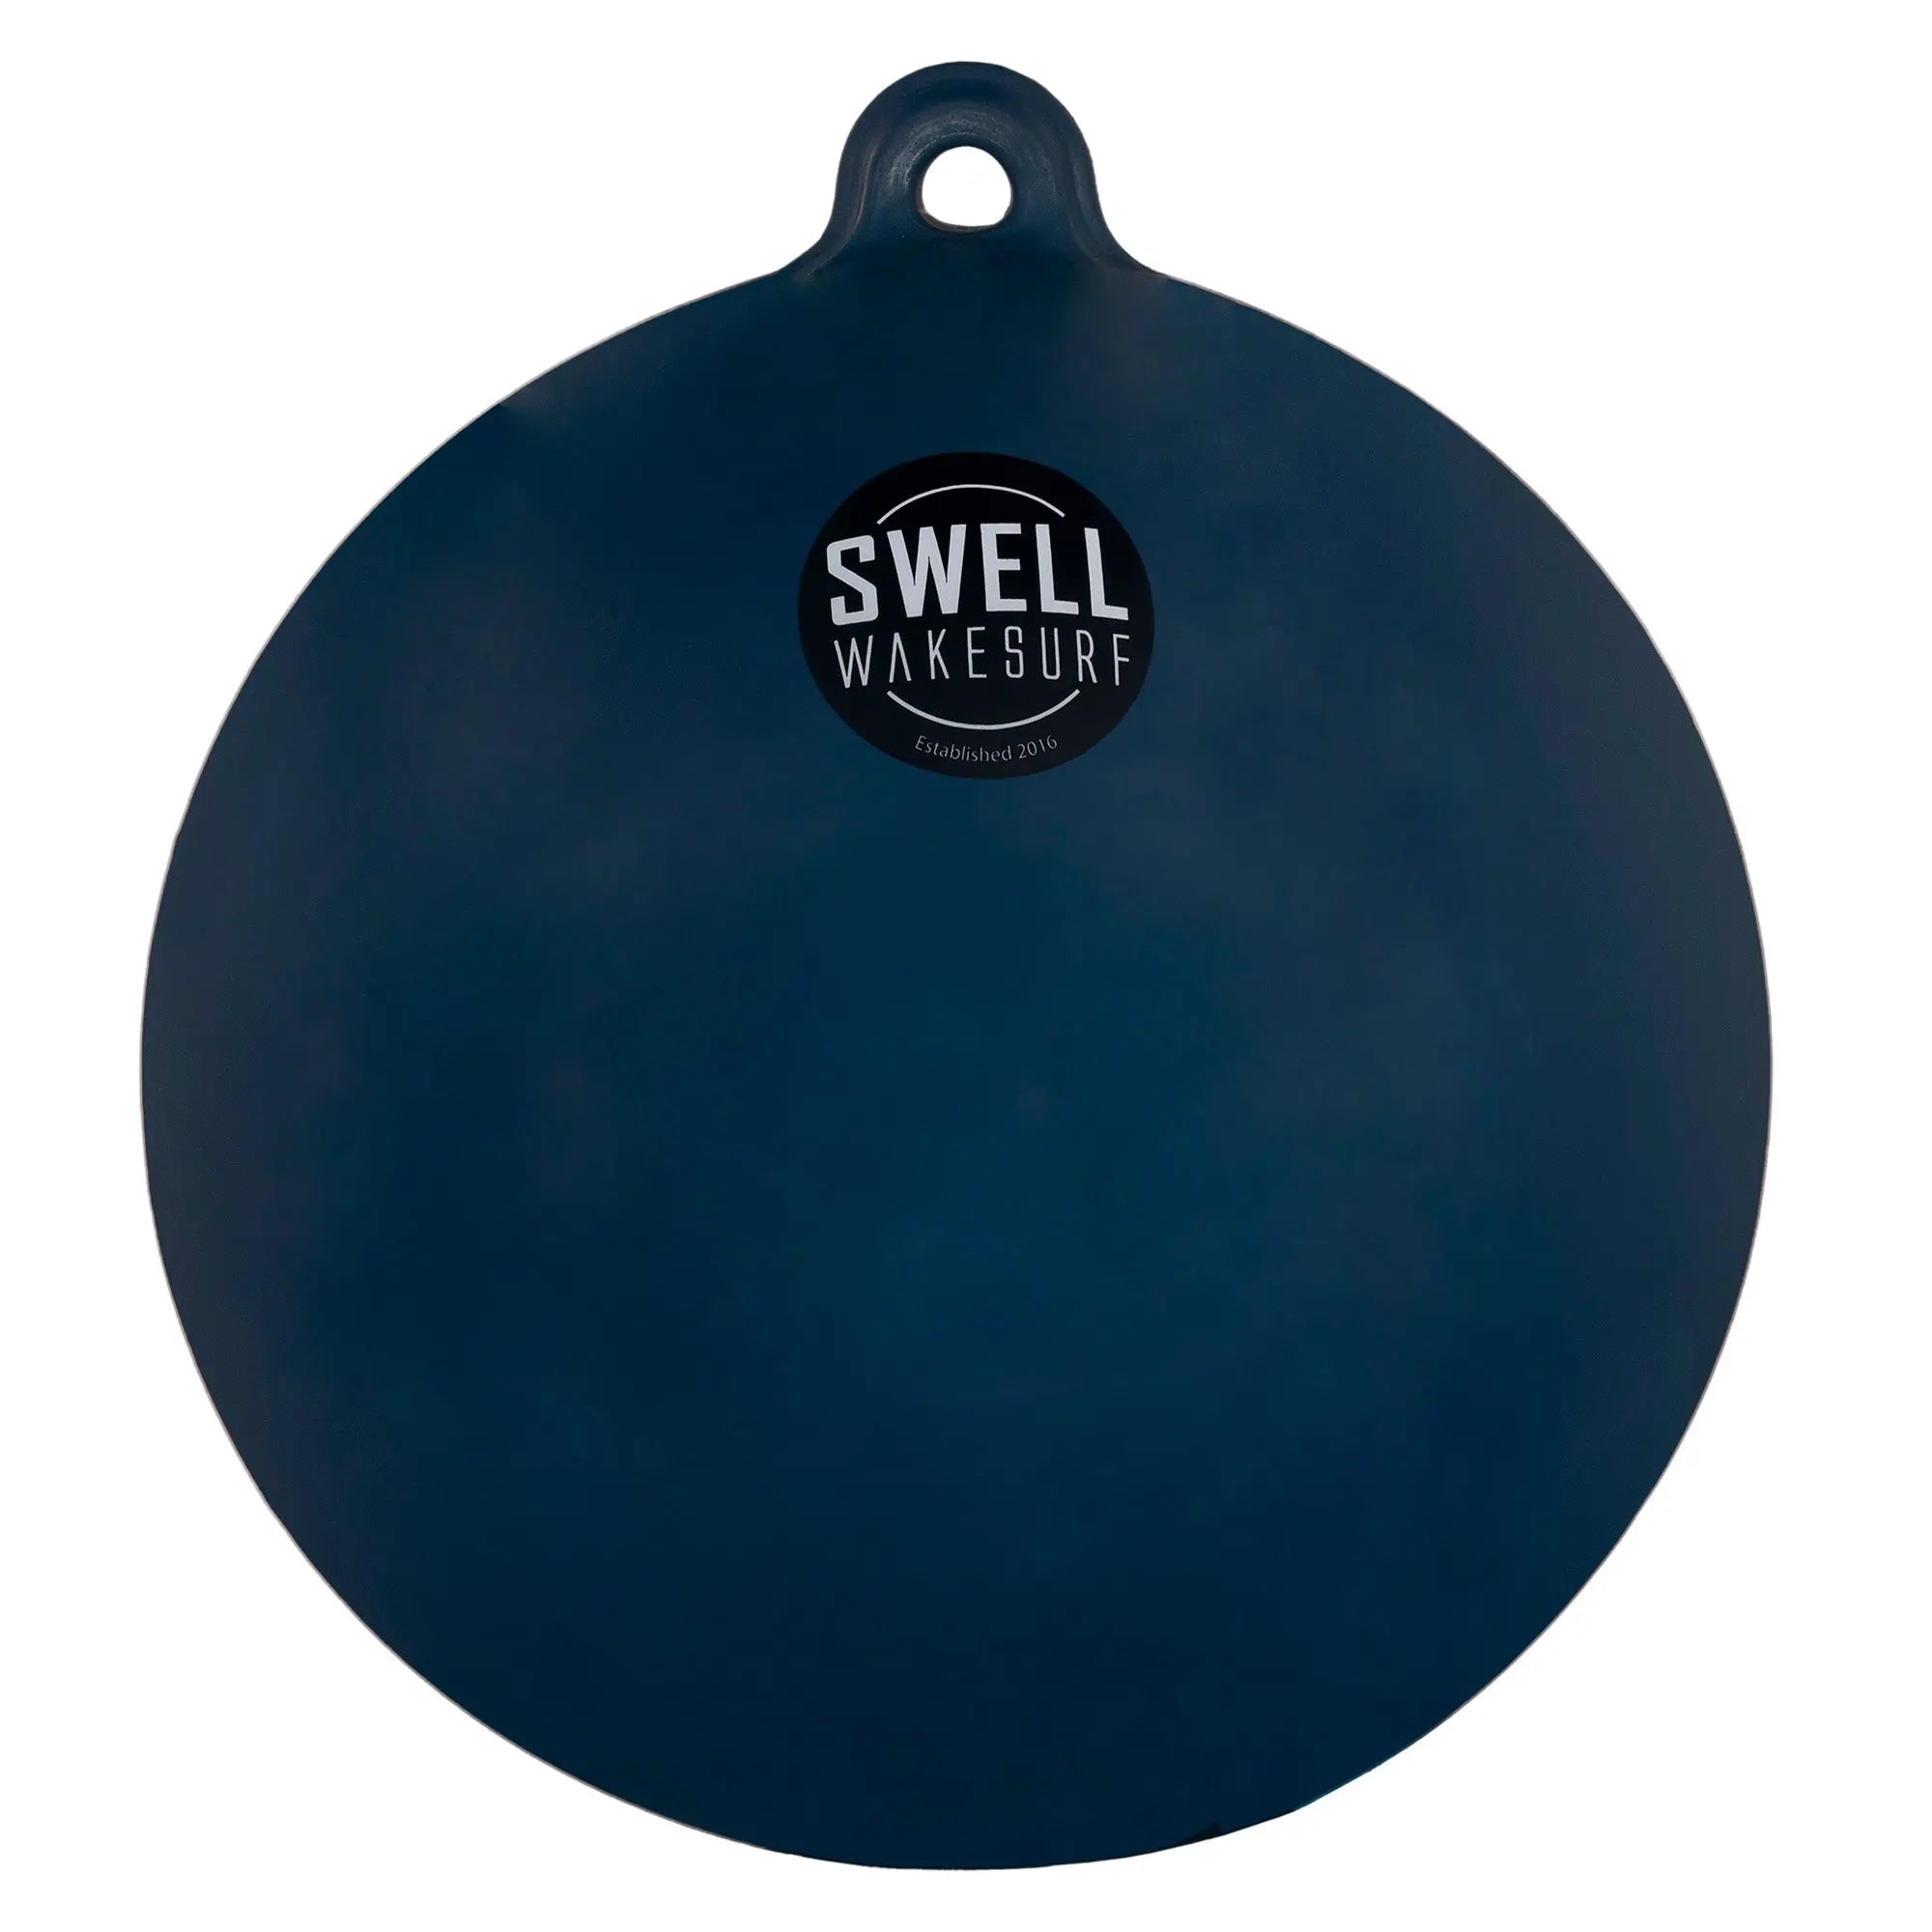 SWELL Wakesurf - Big Buoy Ball Inflatable Bumper Ball - Great For Tie-ups SWELL Wakesurf